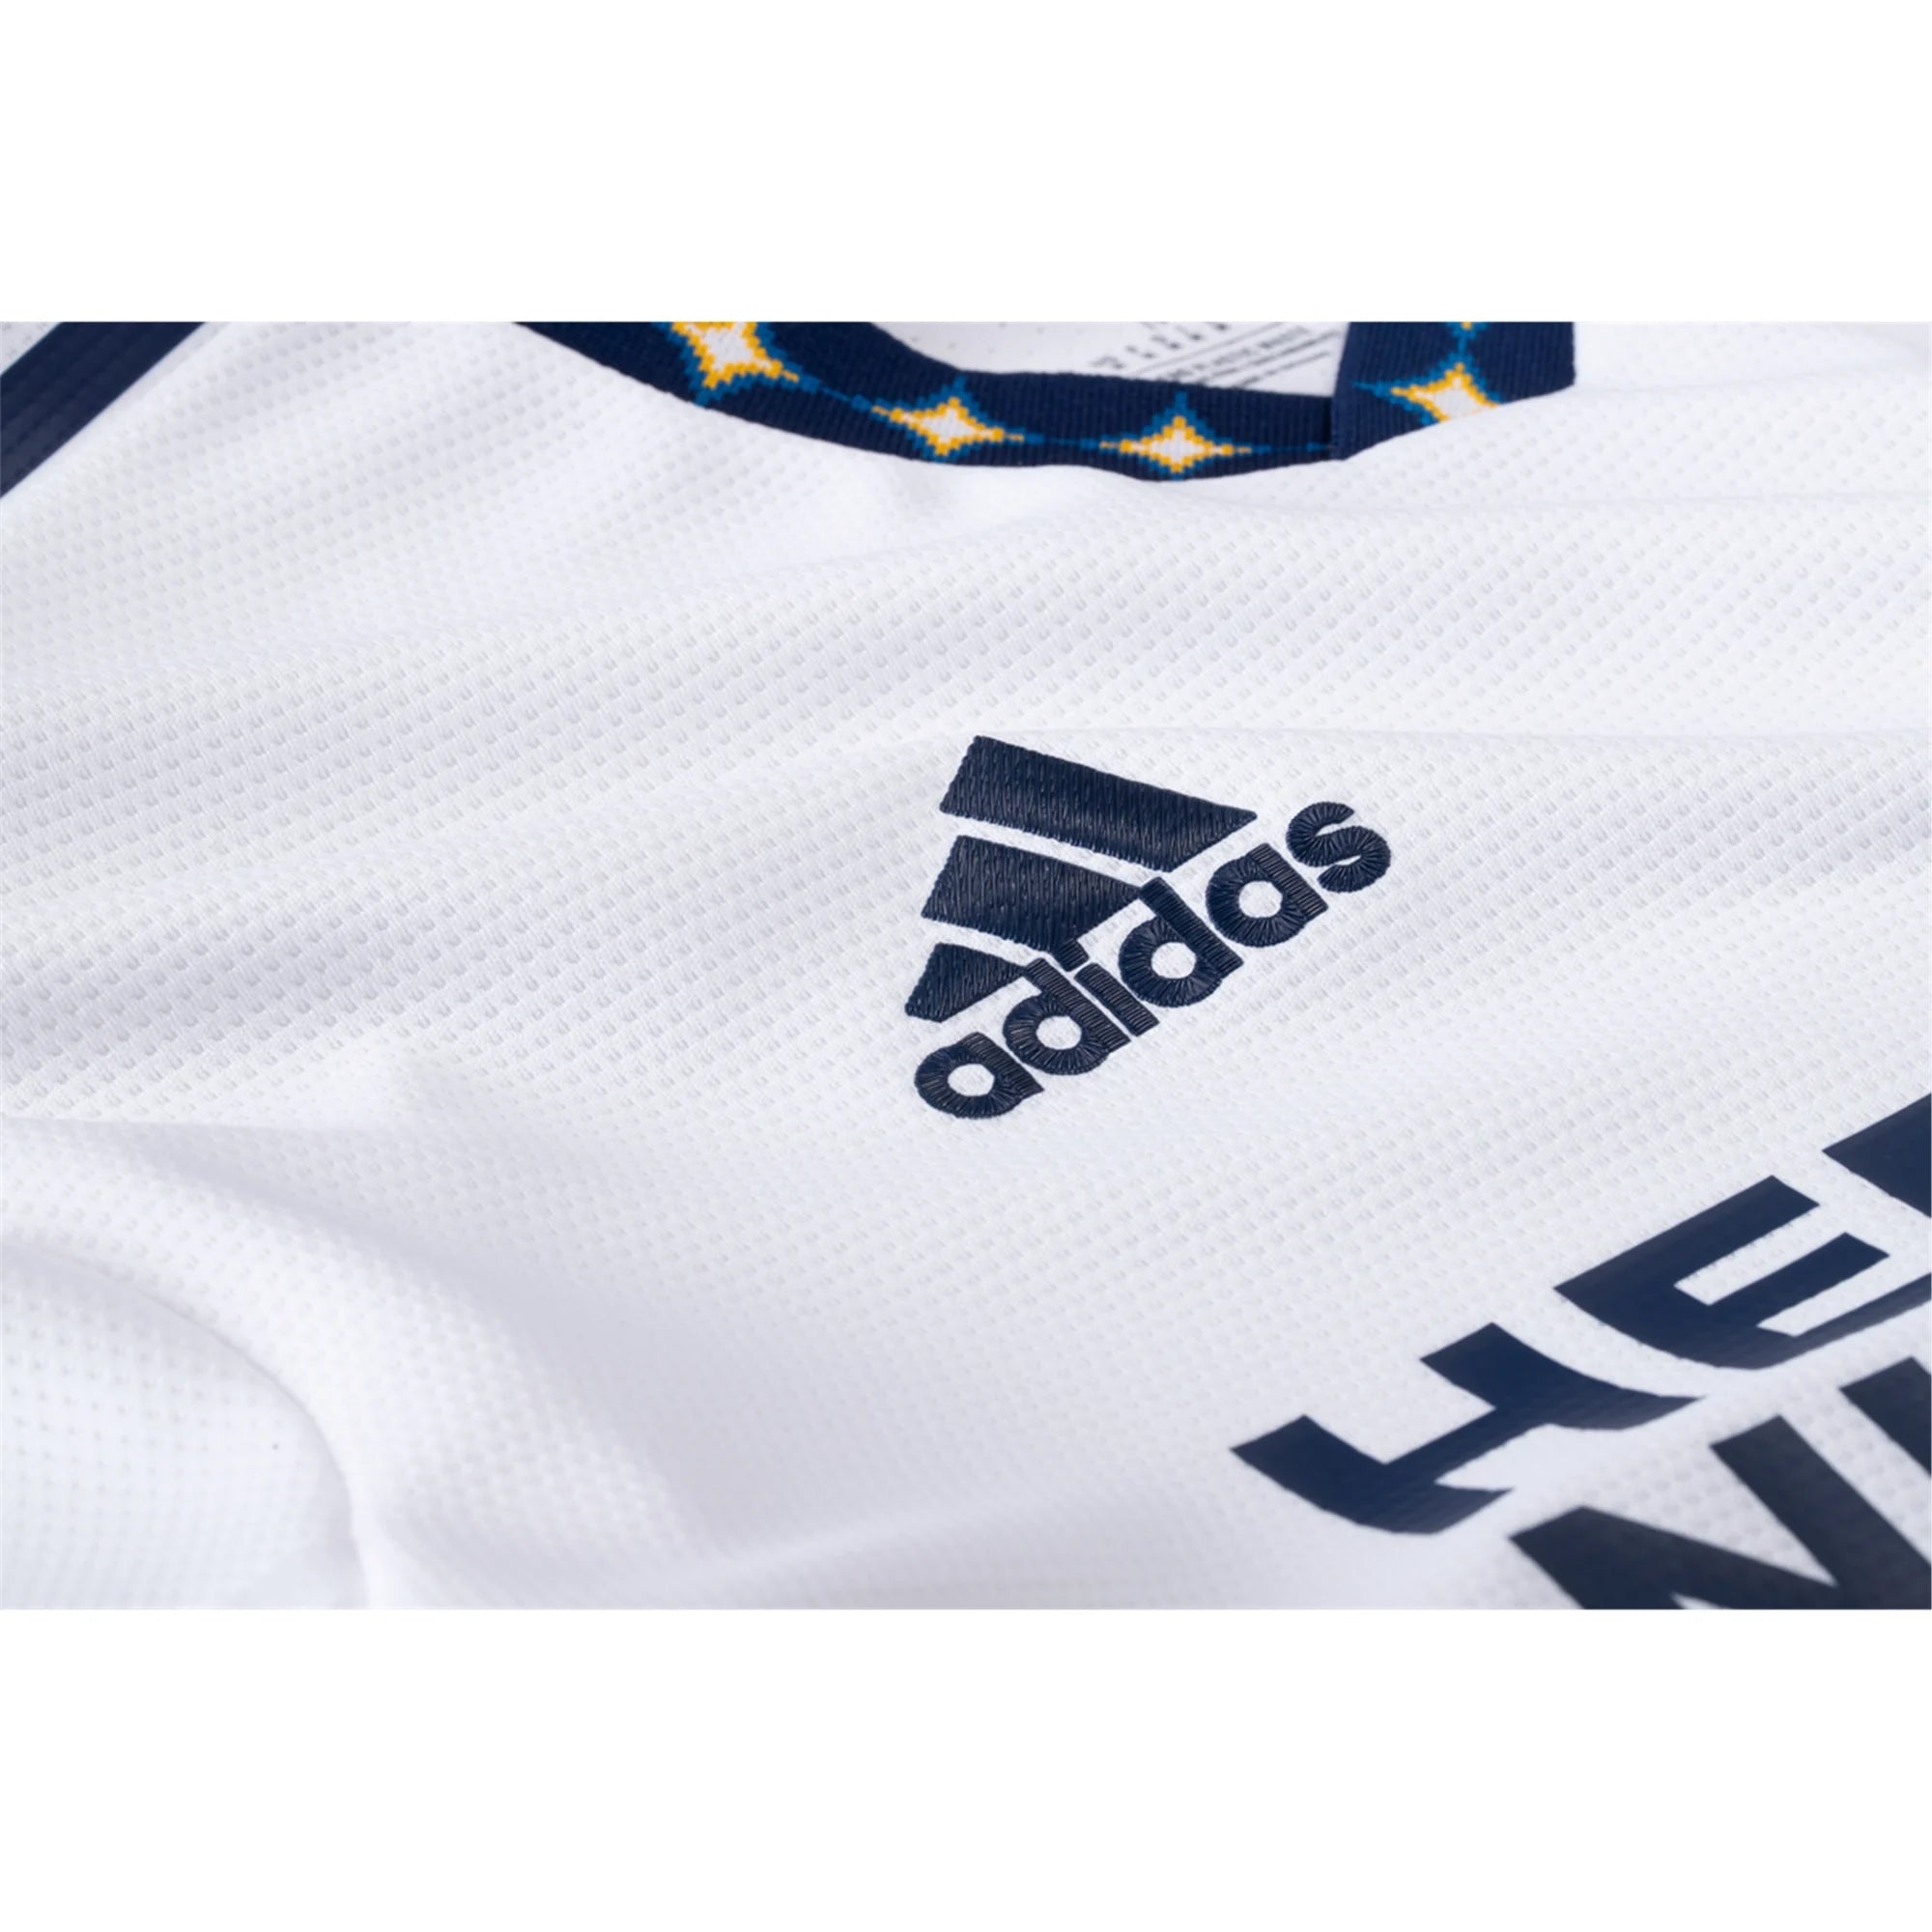 LA Galaxy 2020 adidas Home Jersey - FOOTBALL FASHION